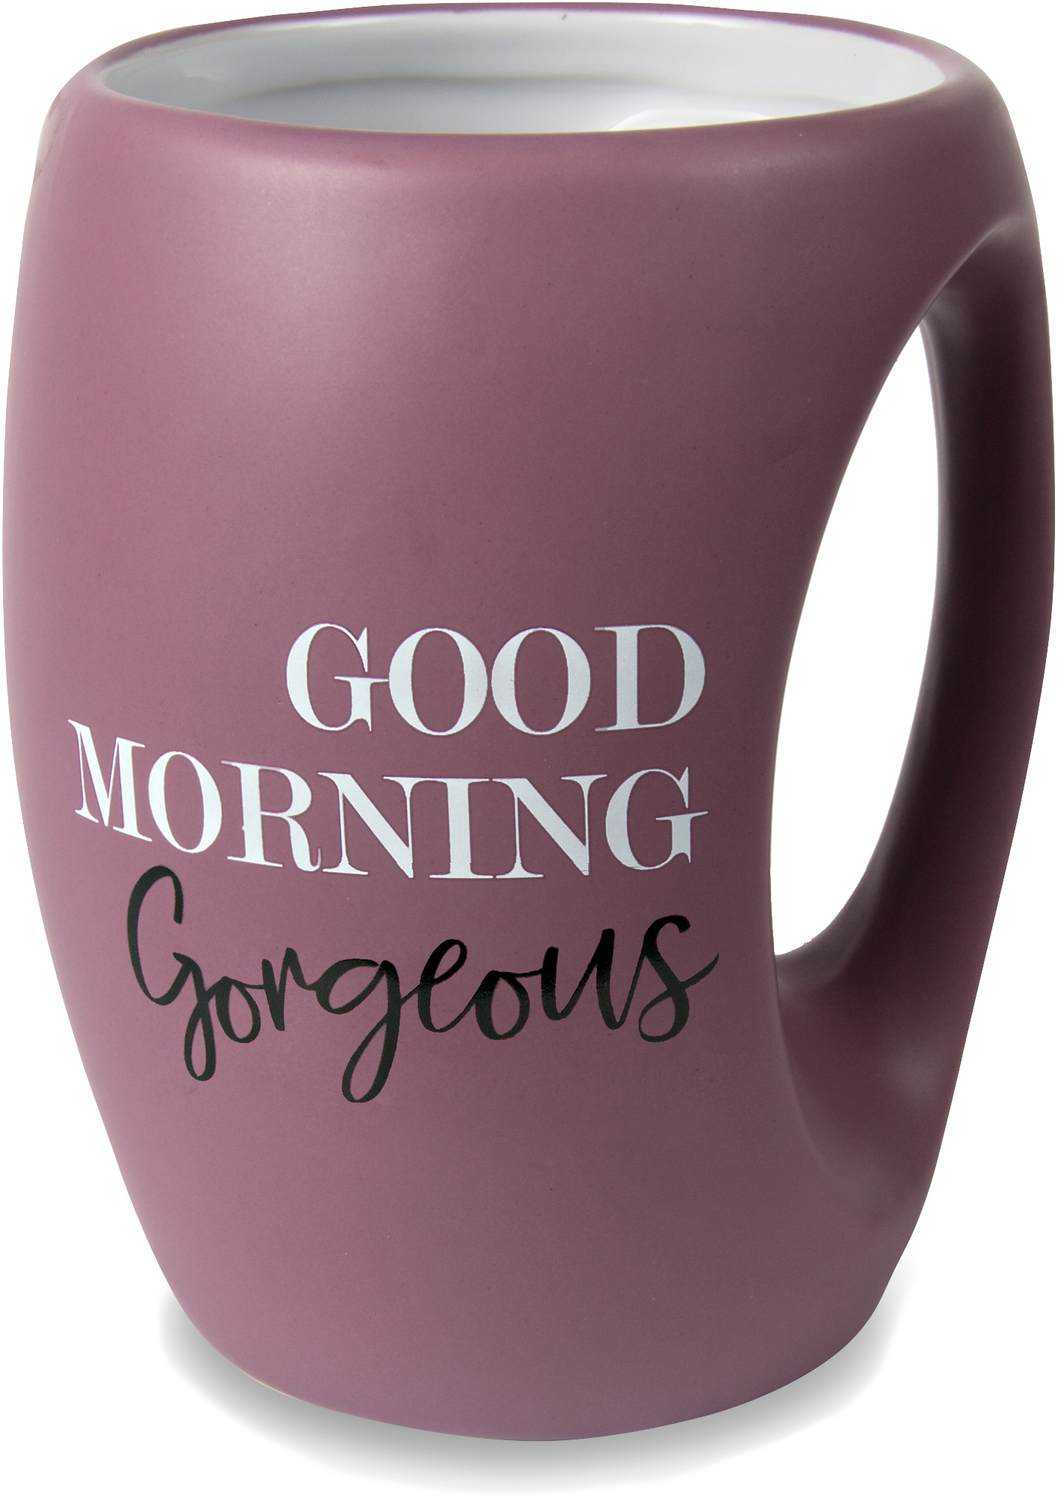 Gorgeous by Good Morning - Gorgeous - 16oz. Mug